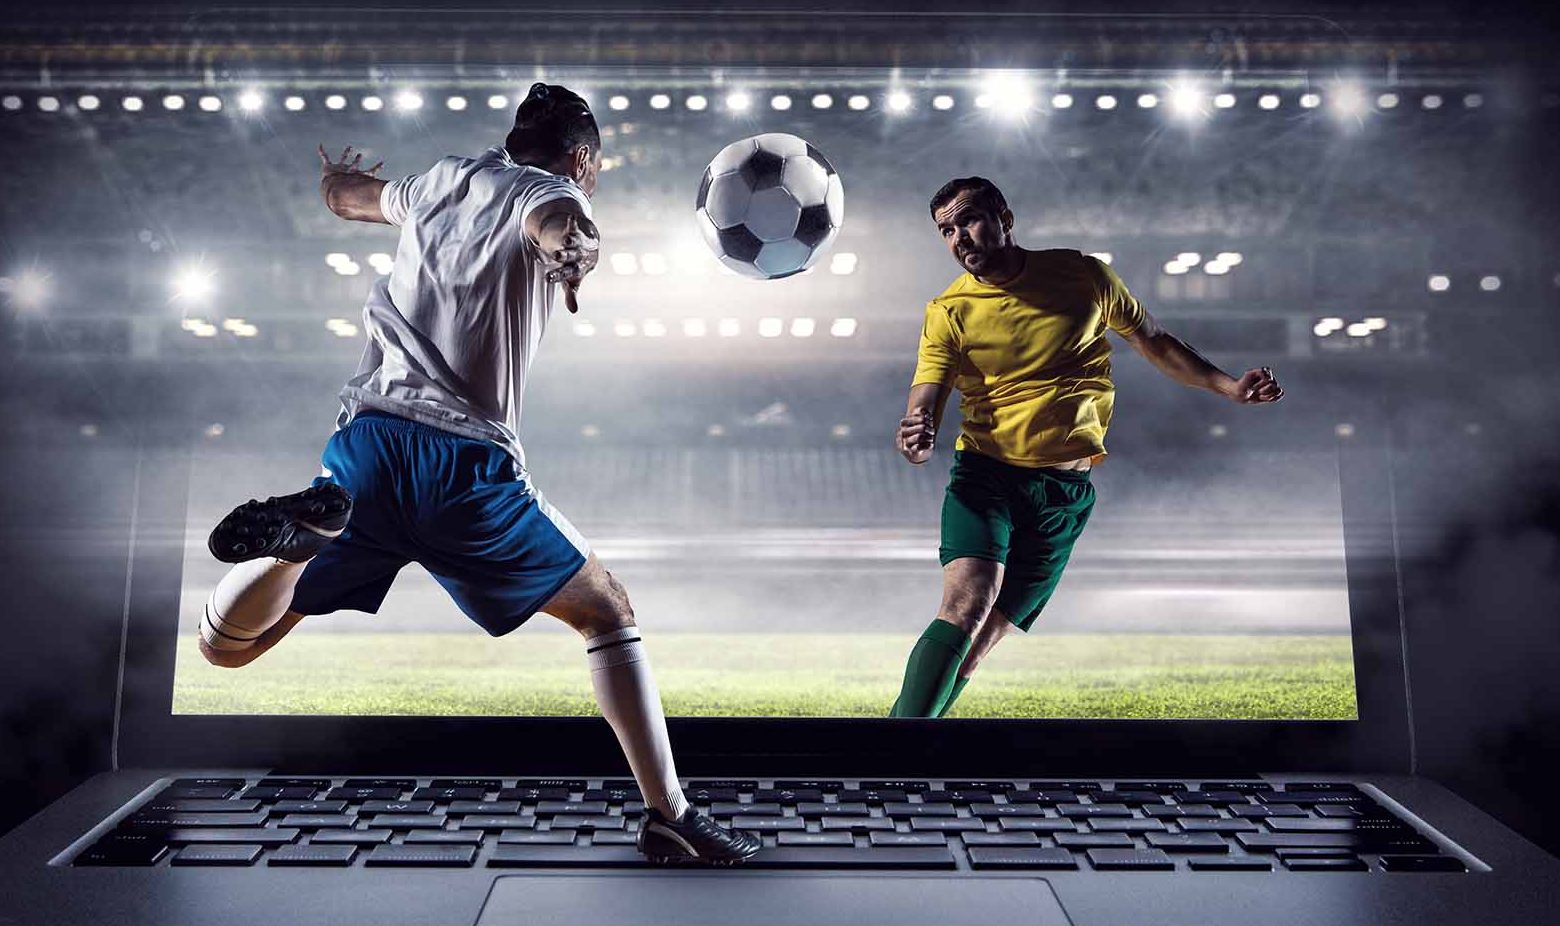 Ставки онлайн на спорт: новое поколение развлечений